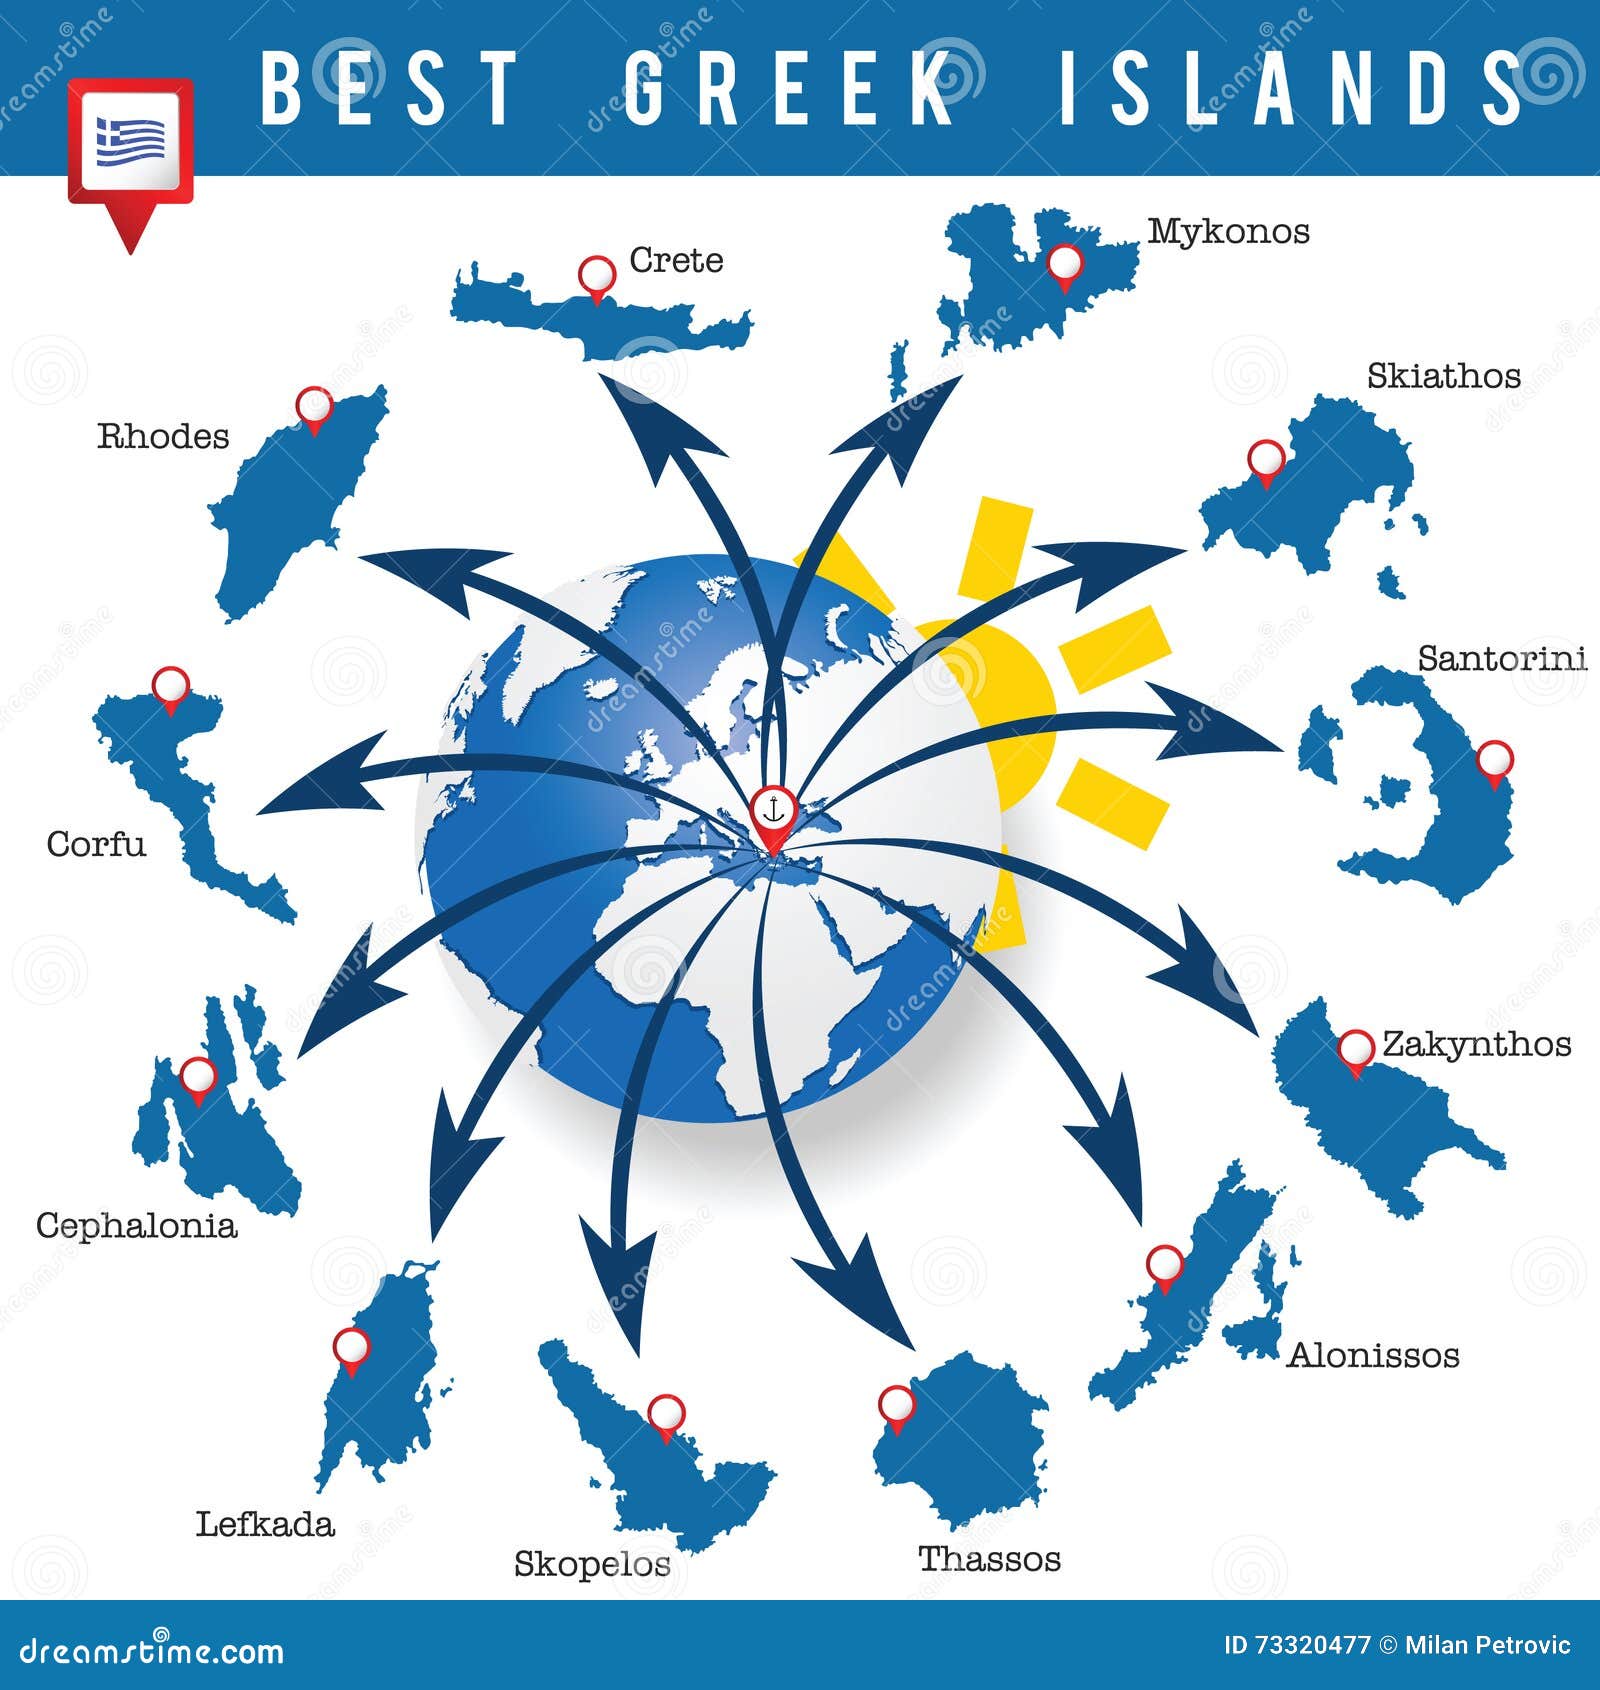 greek islands clip art - photo #3